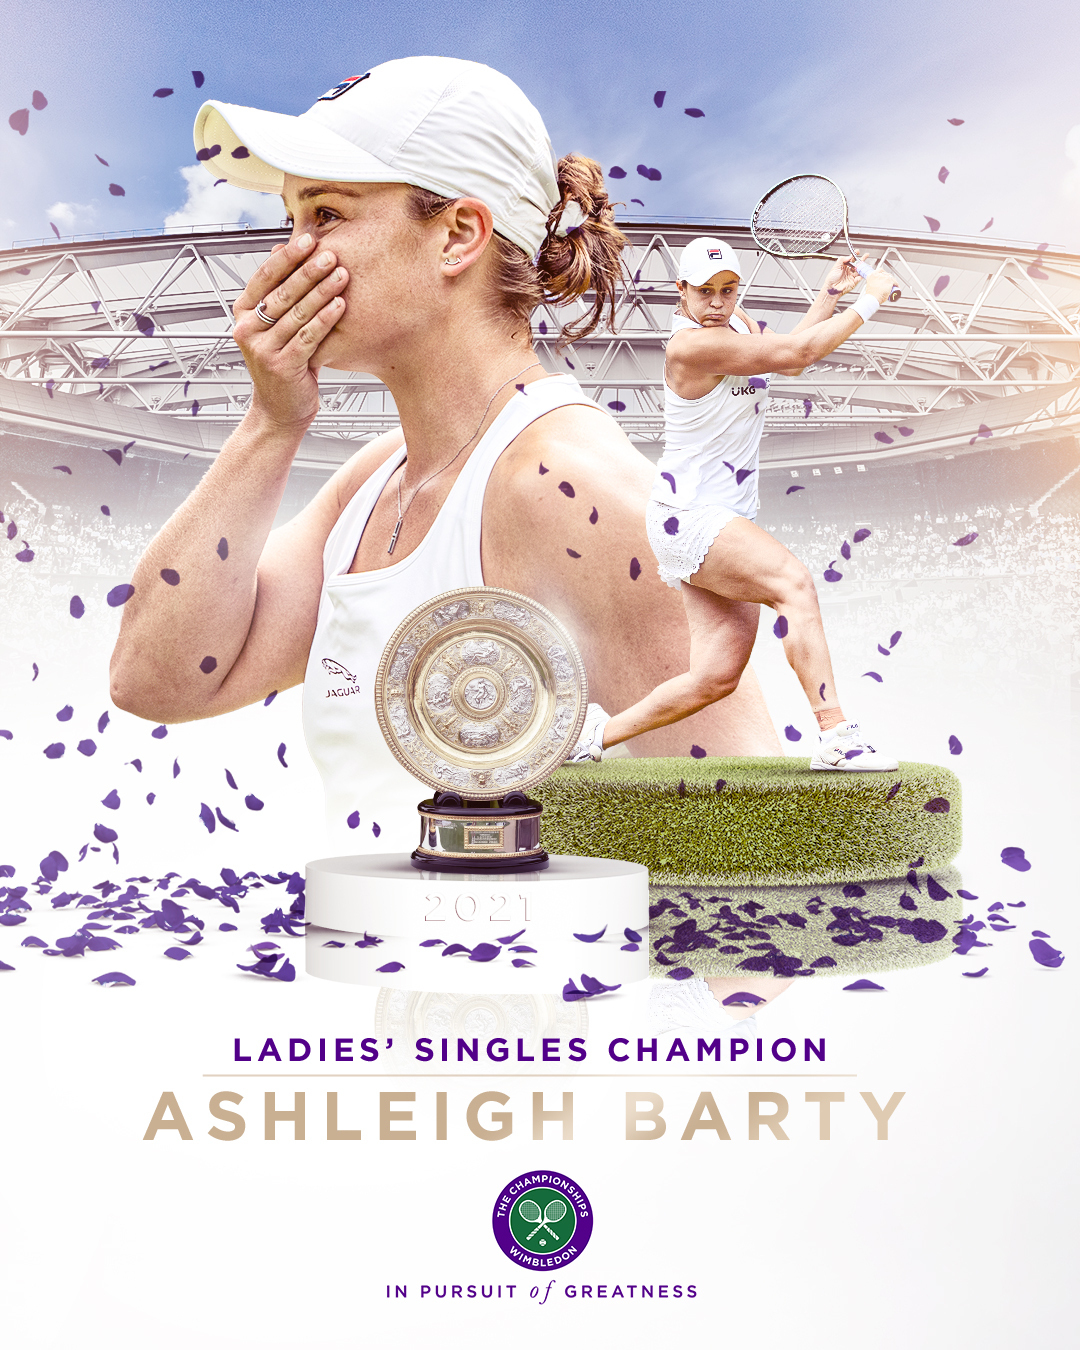 World No.1 Ash Barty wins her maiden Wimbledon title, defeats Karolina Pliskova in a tight 3 set battle